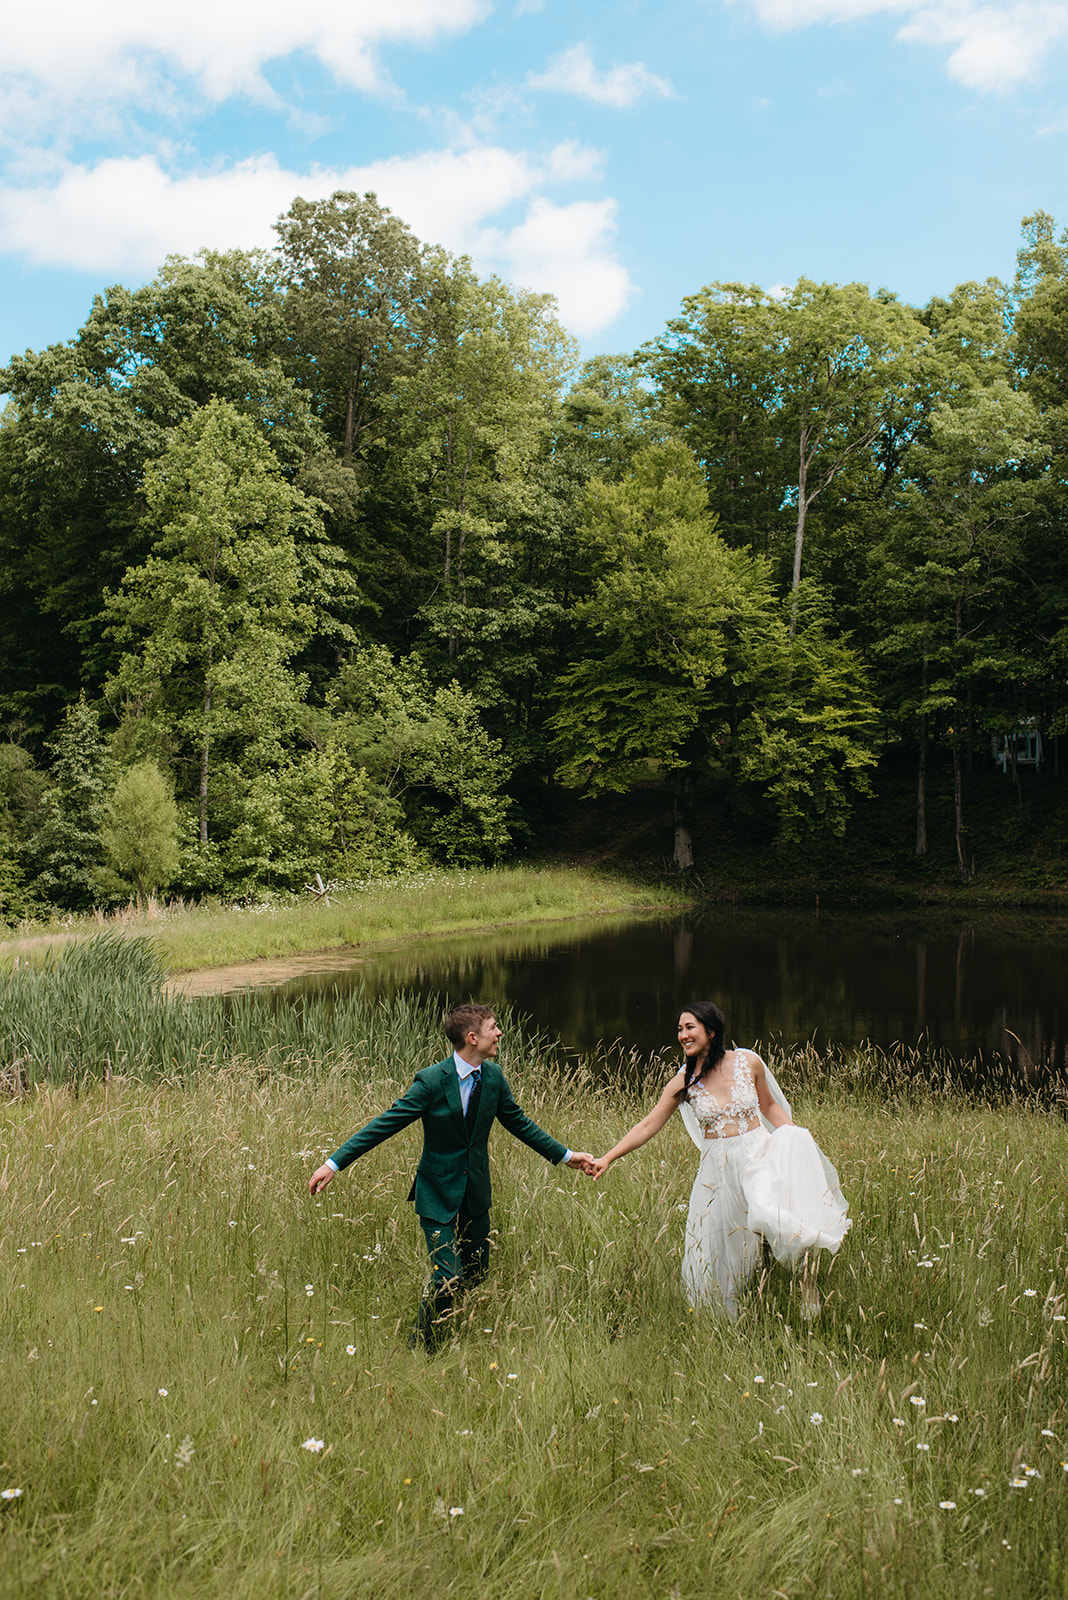 Whimsical woodland wedding photography at Boma Lodge in Greensboro